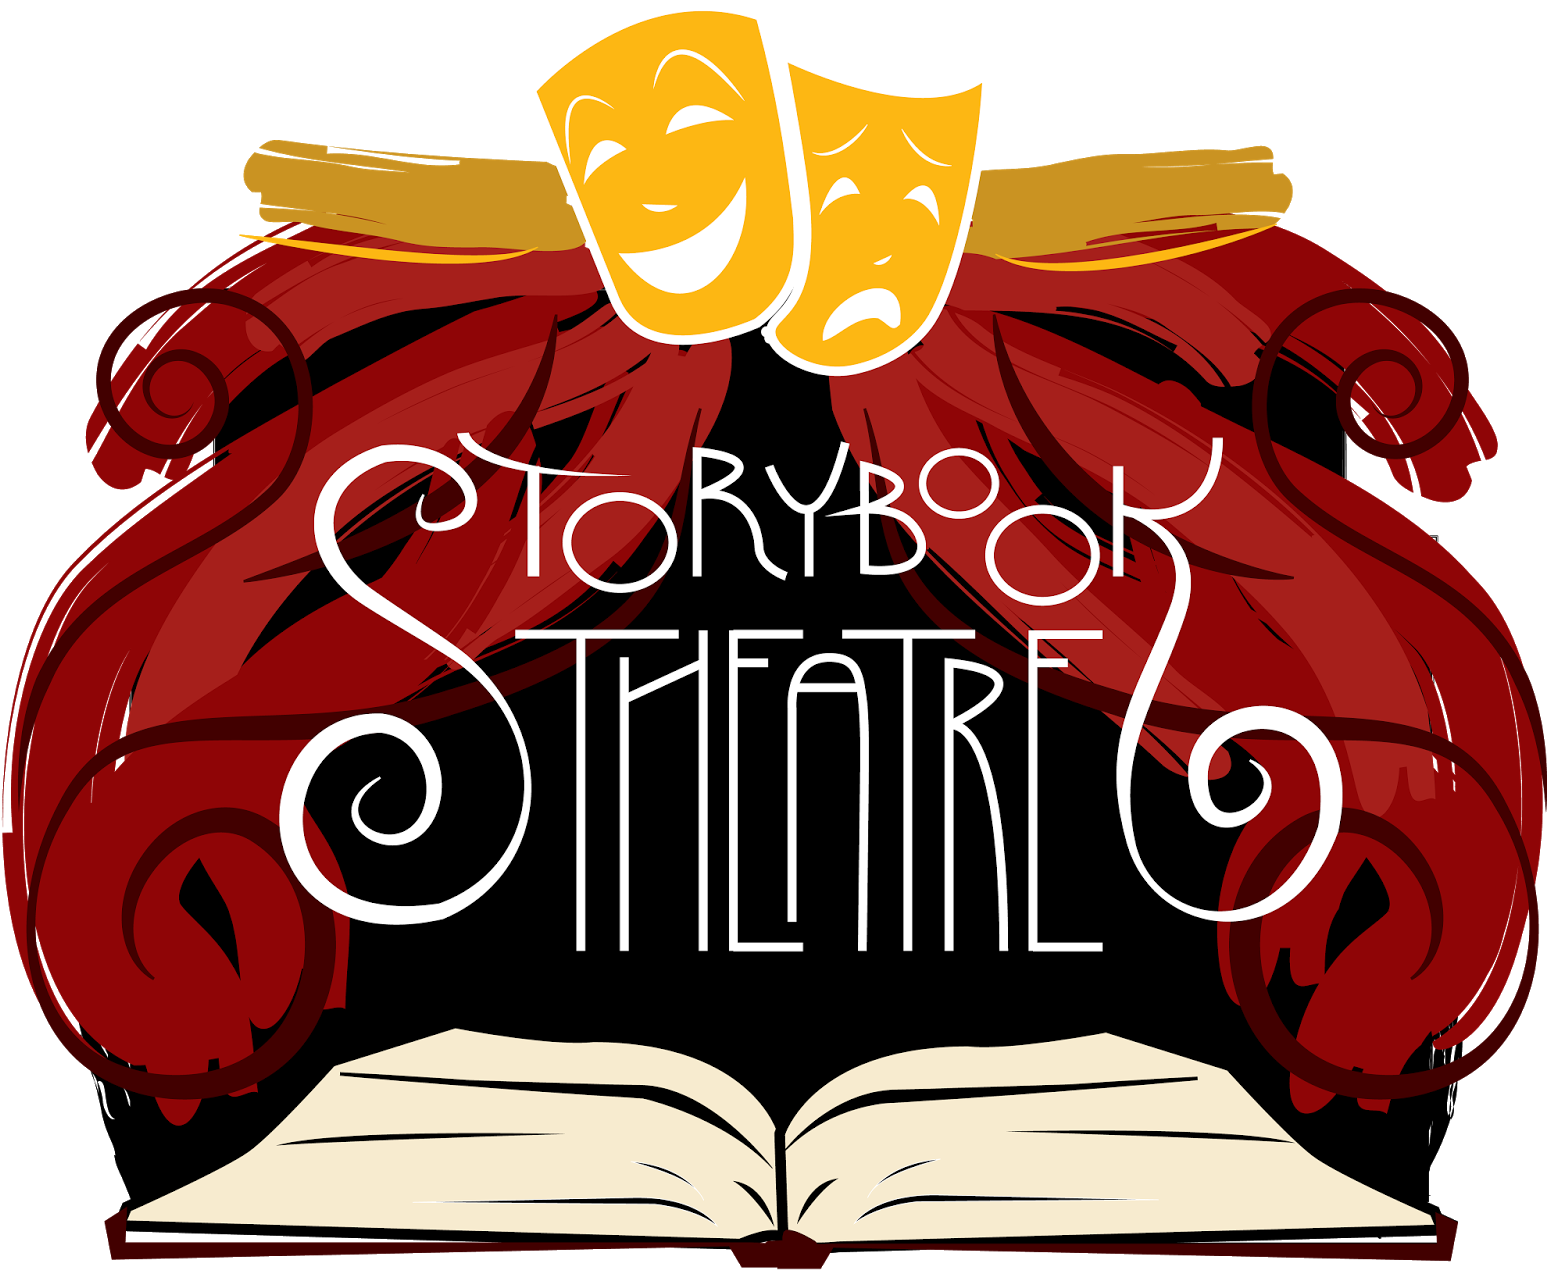 Storybook Theatre & Private Drama Studio - Lee's Summit (1600x1412)